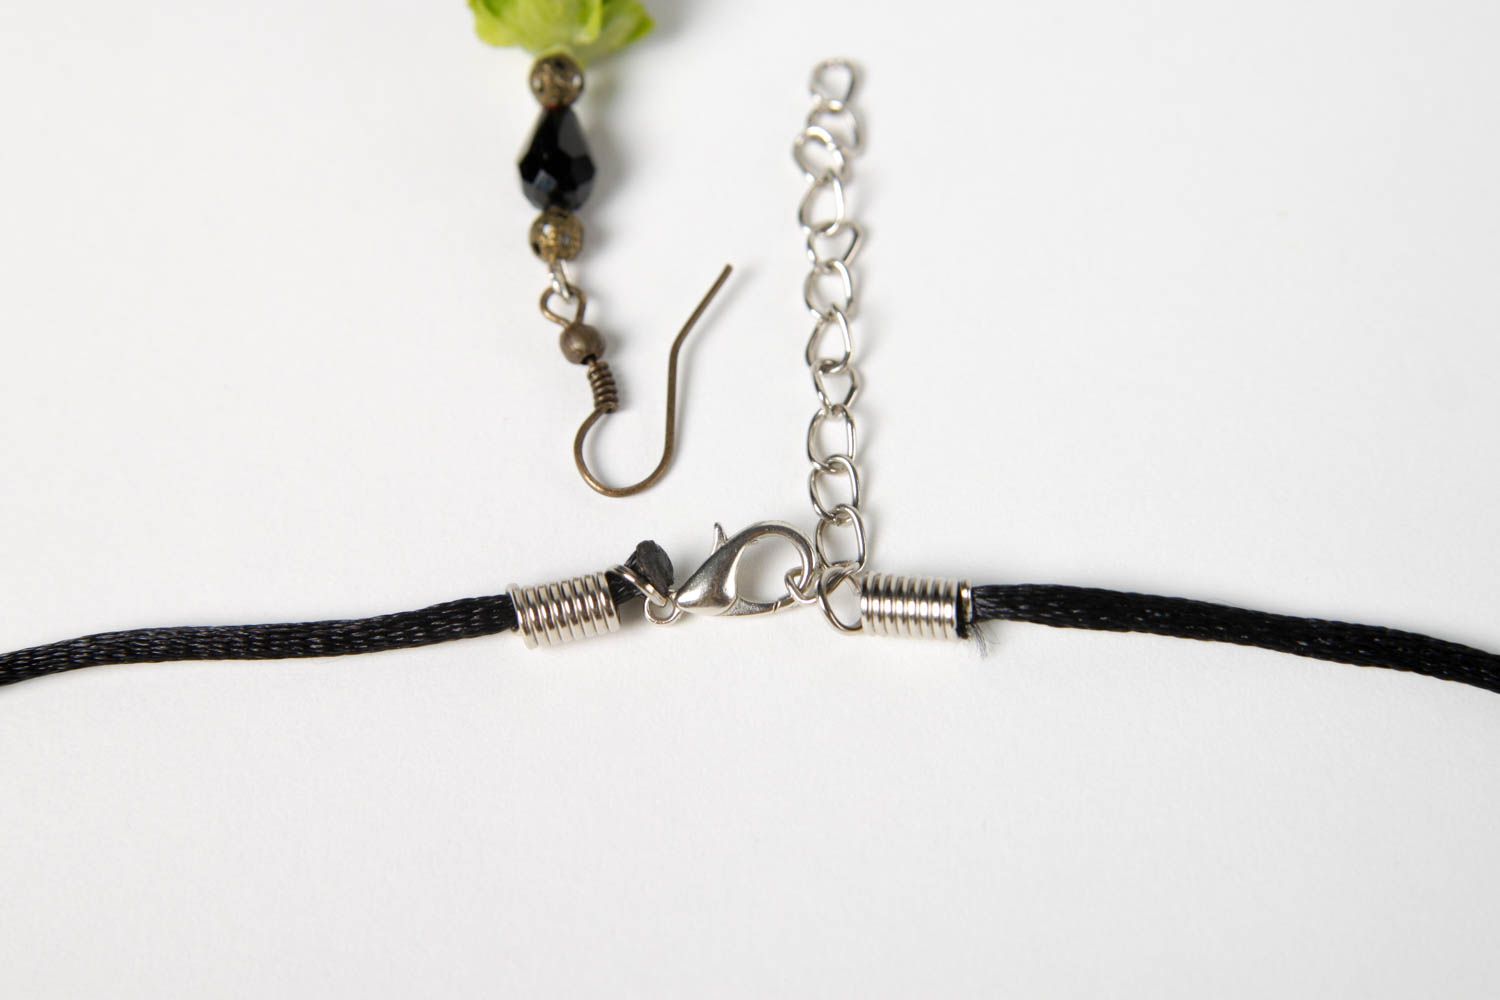 Handmade earrings designer pendant unusual jewelry set gift ideas for women photo 4